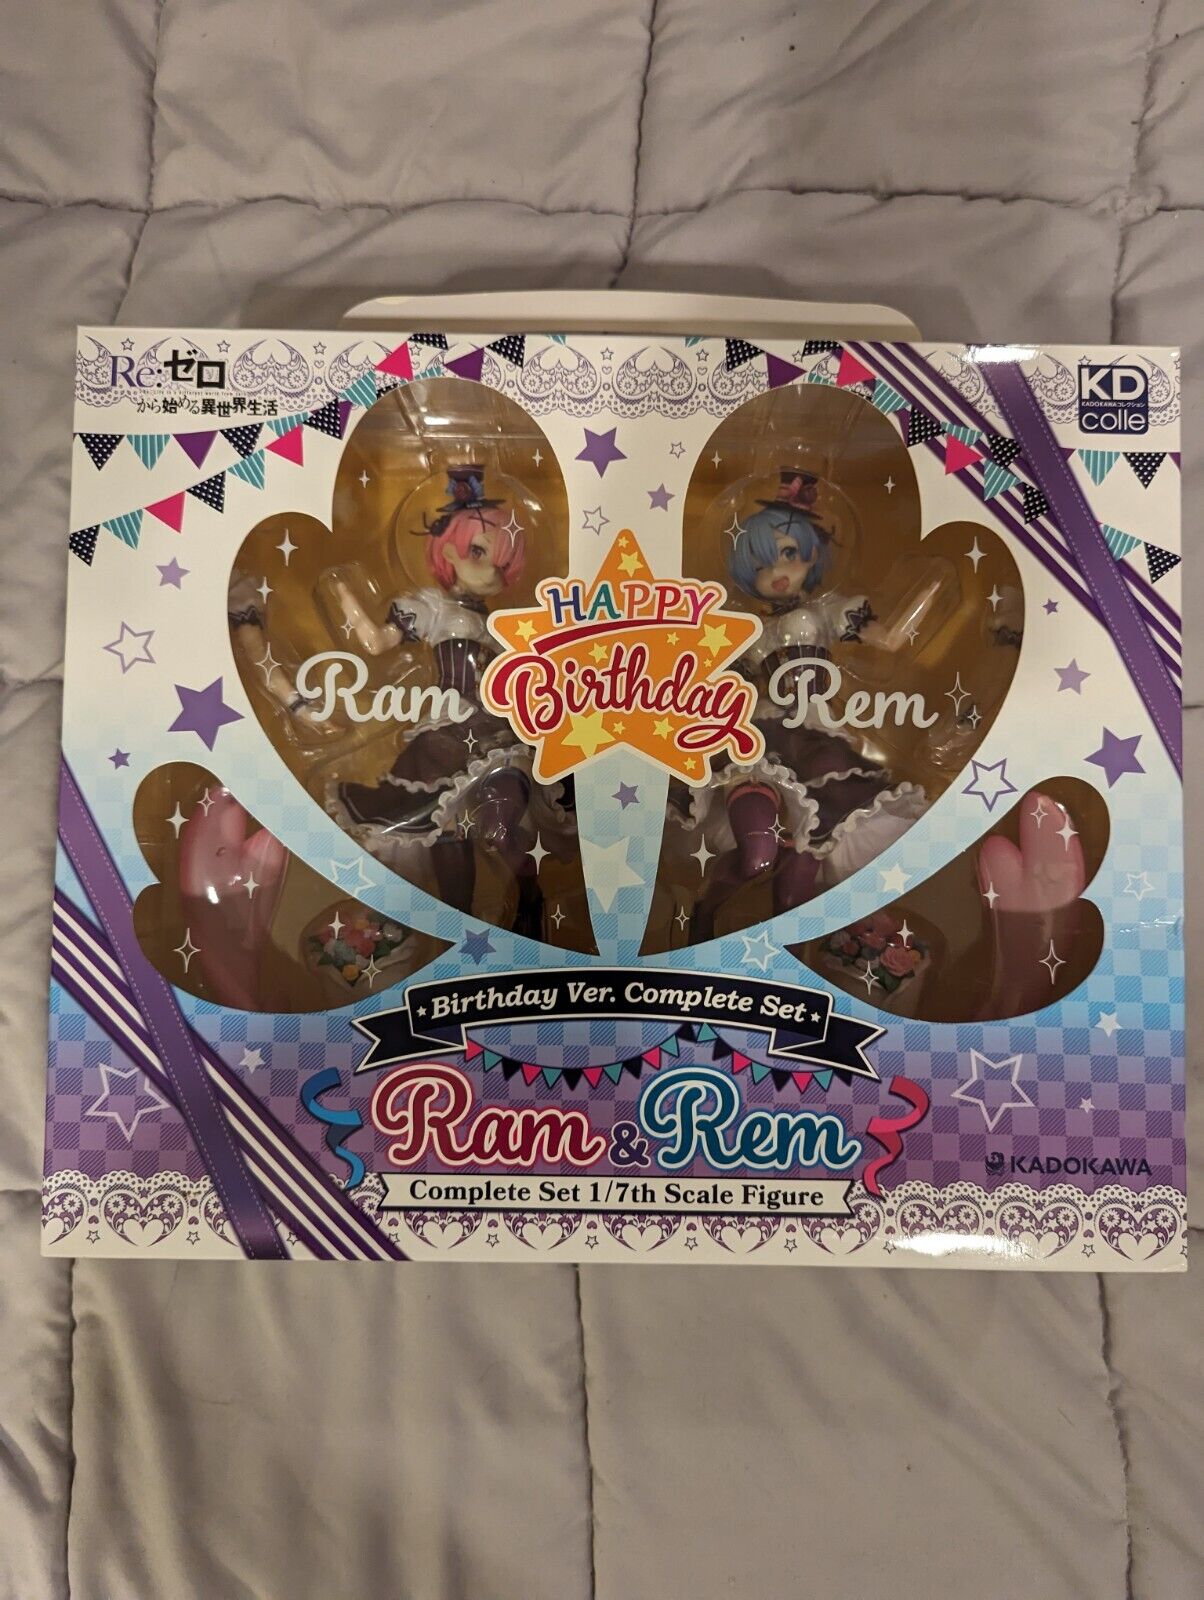 KD Colle Figure Ram Rem Complete Set Birthday Festival Re:Zero 1/7